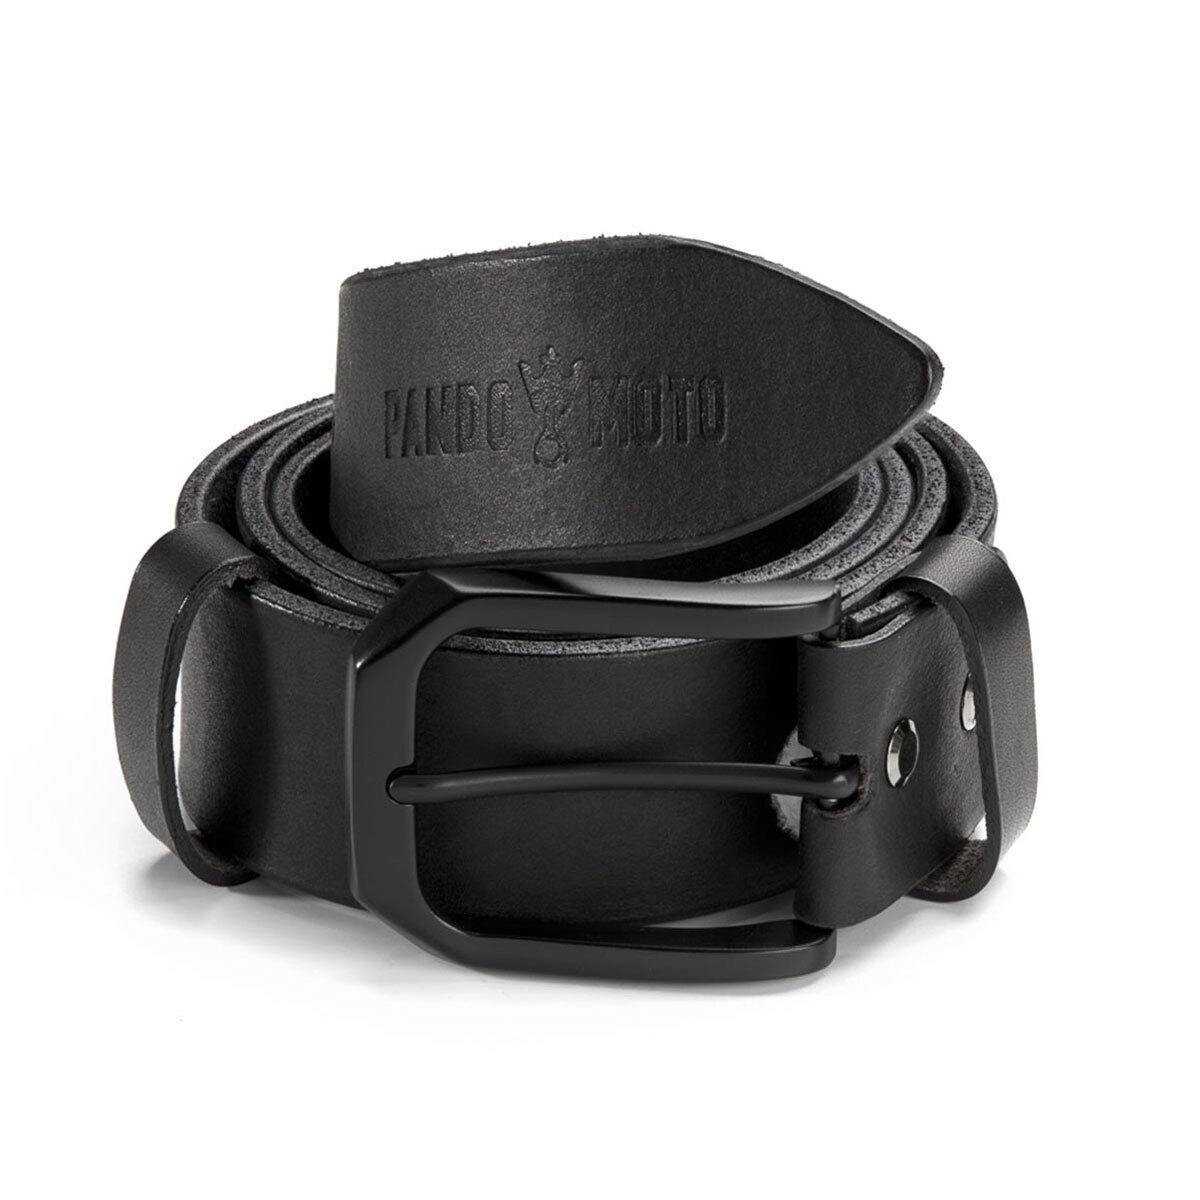 Pando Moto Himo 2 Fashionable Casual Wear Leather Belt Black - 4cm X 110cm